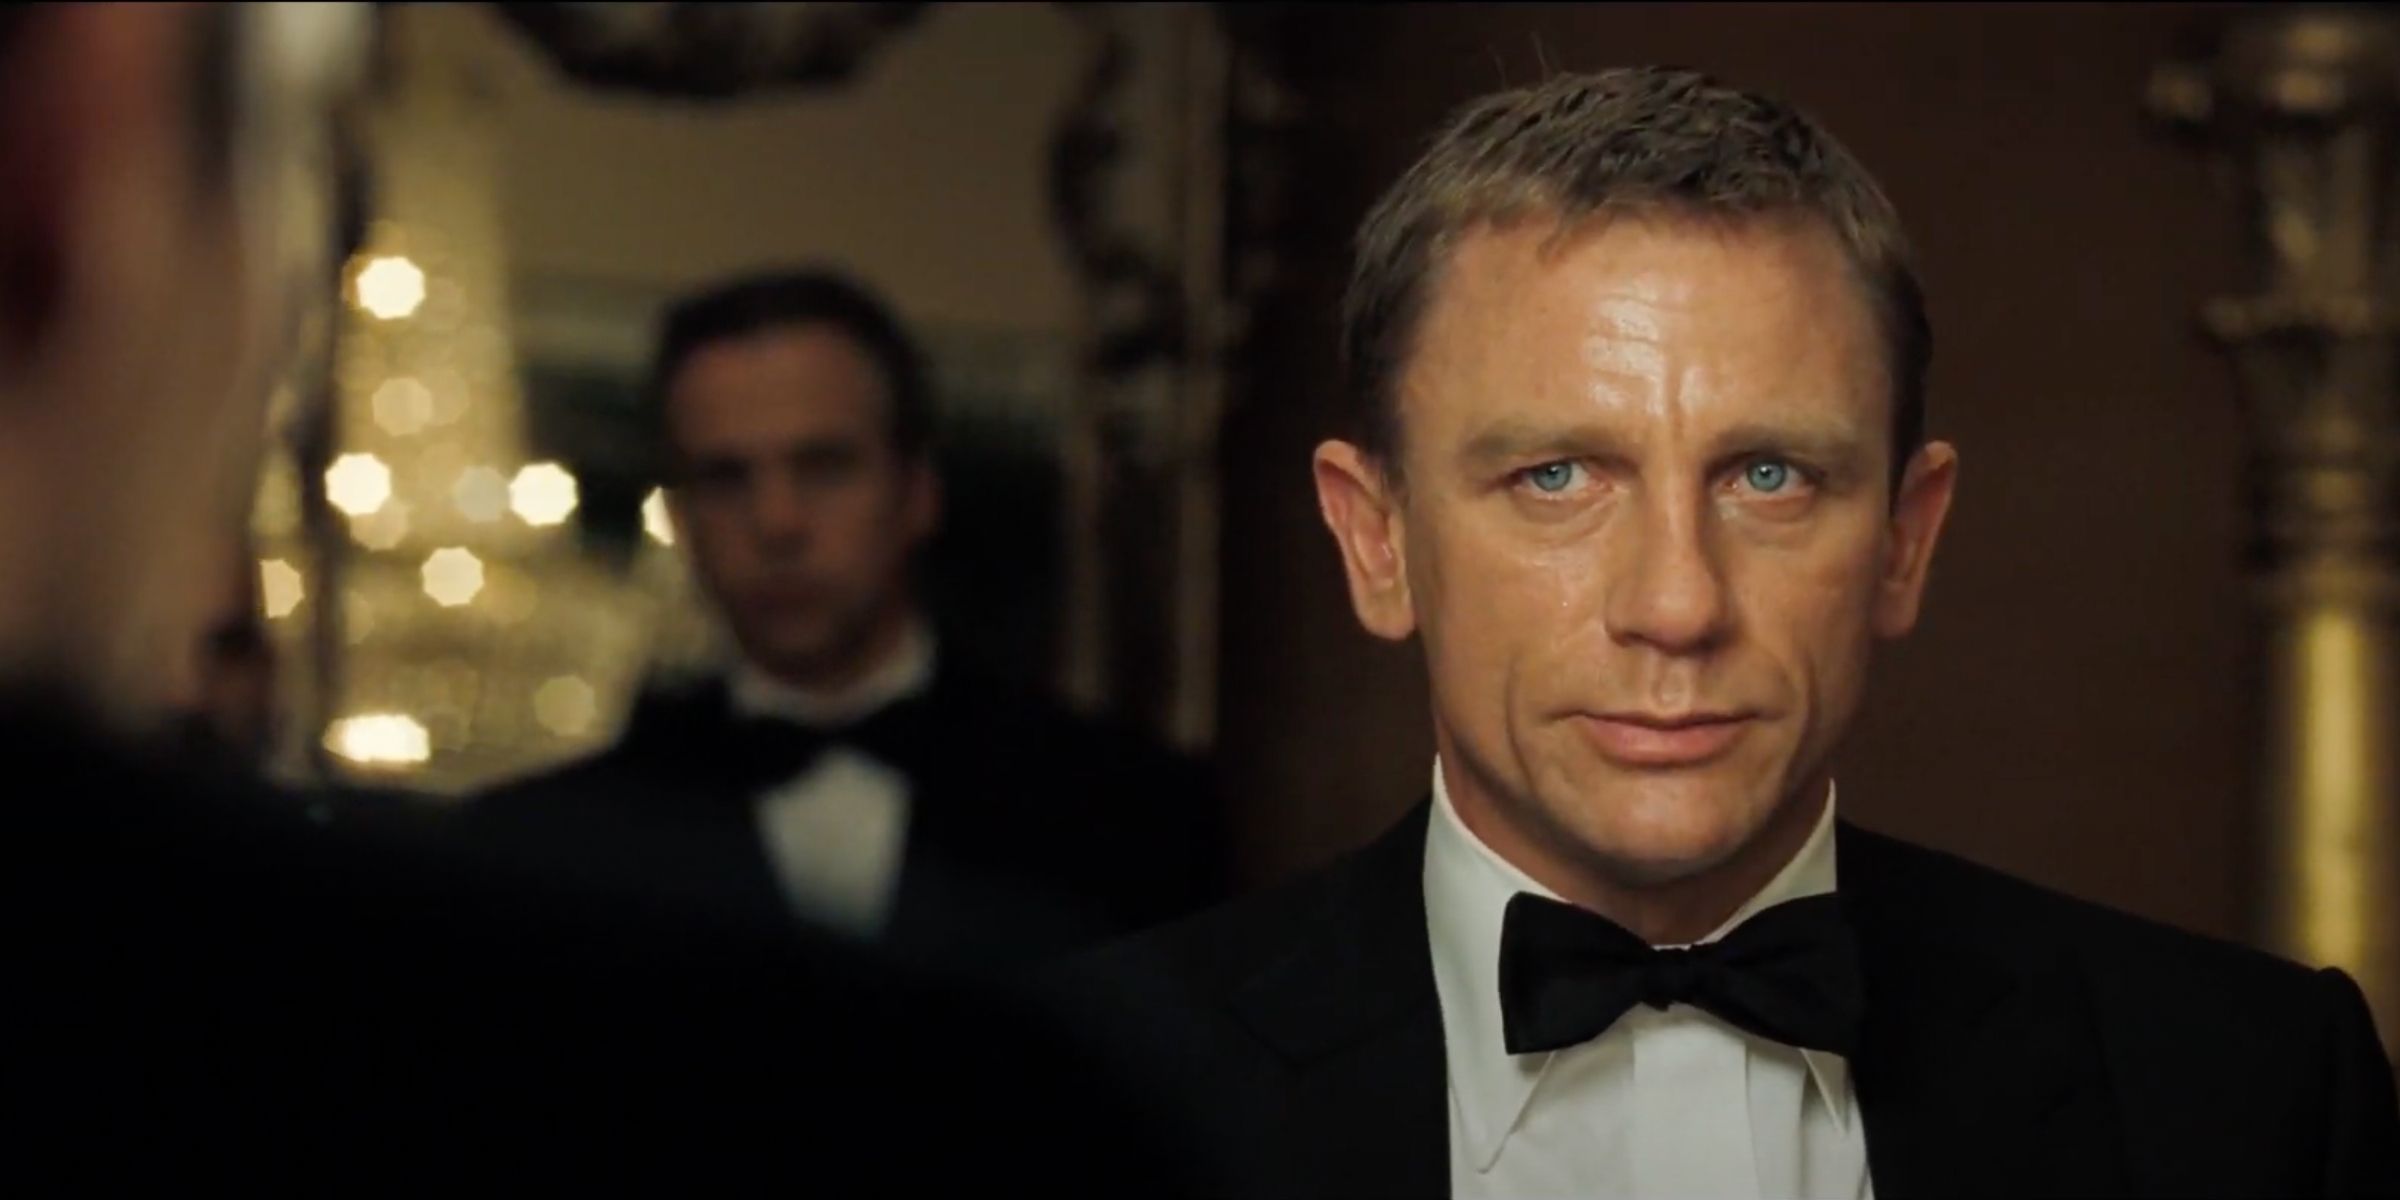 James Bond (Daniel Craig) confronts Le Chiffre at the poker table in 'Casino Royale'.